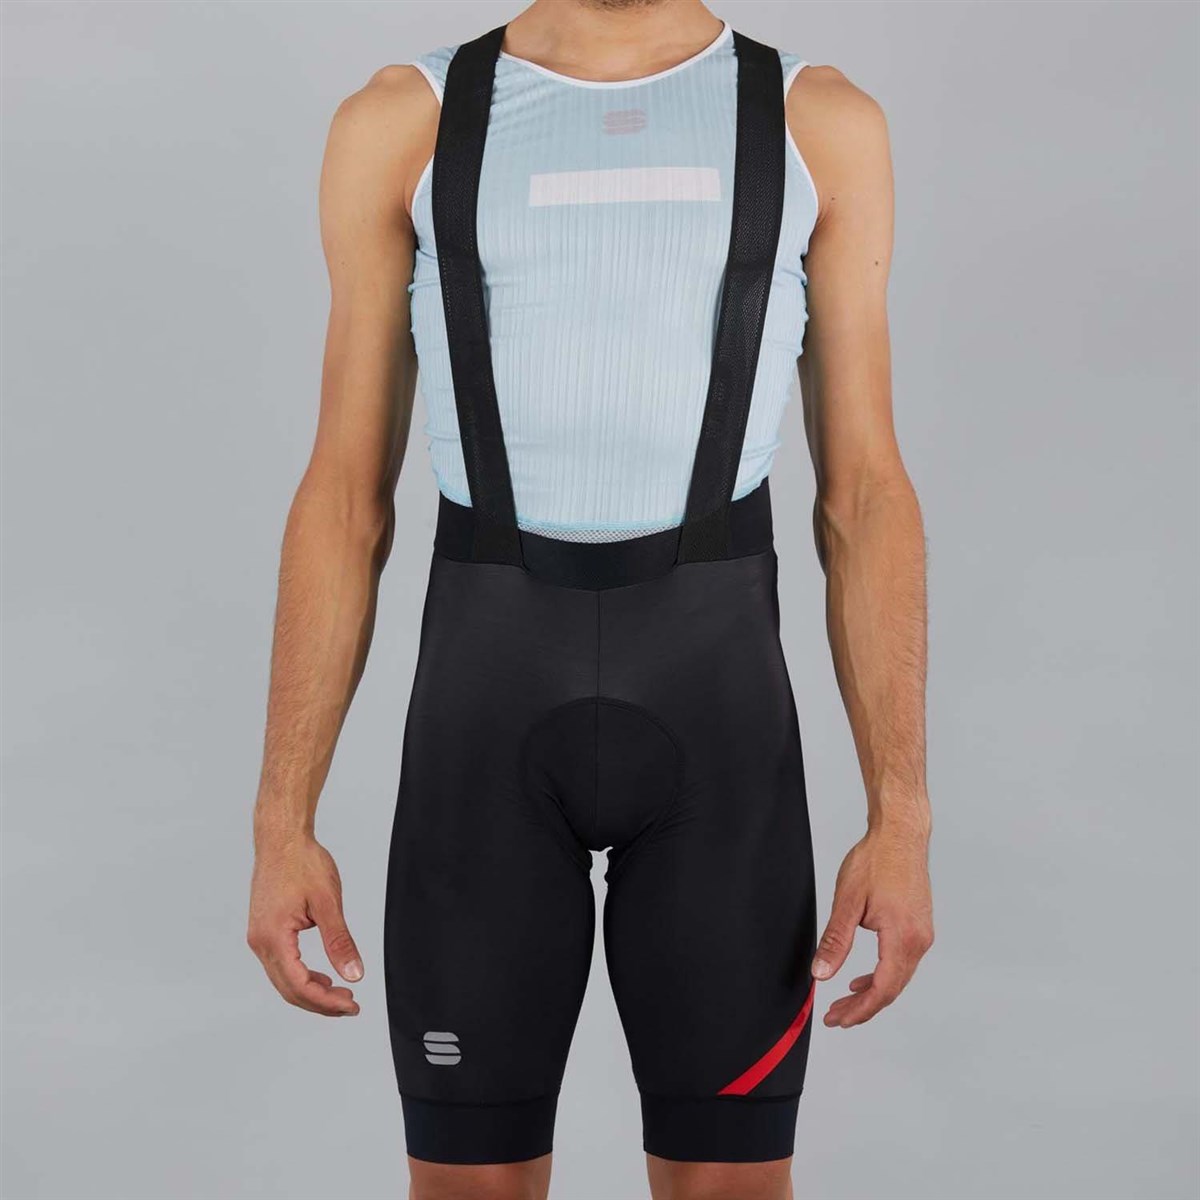 Sportful Fiandre Norain Pro Cycling Bib Shorts product image